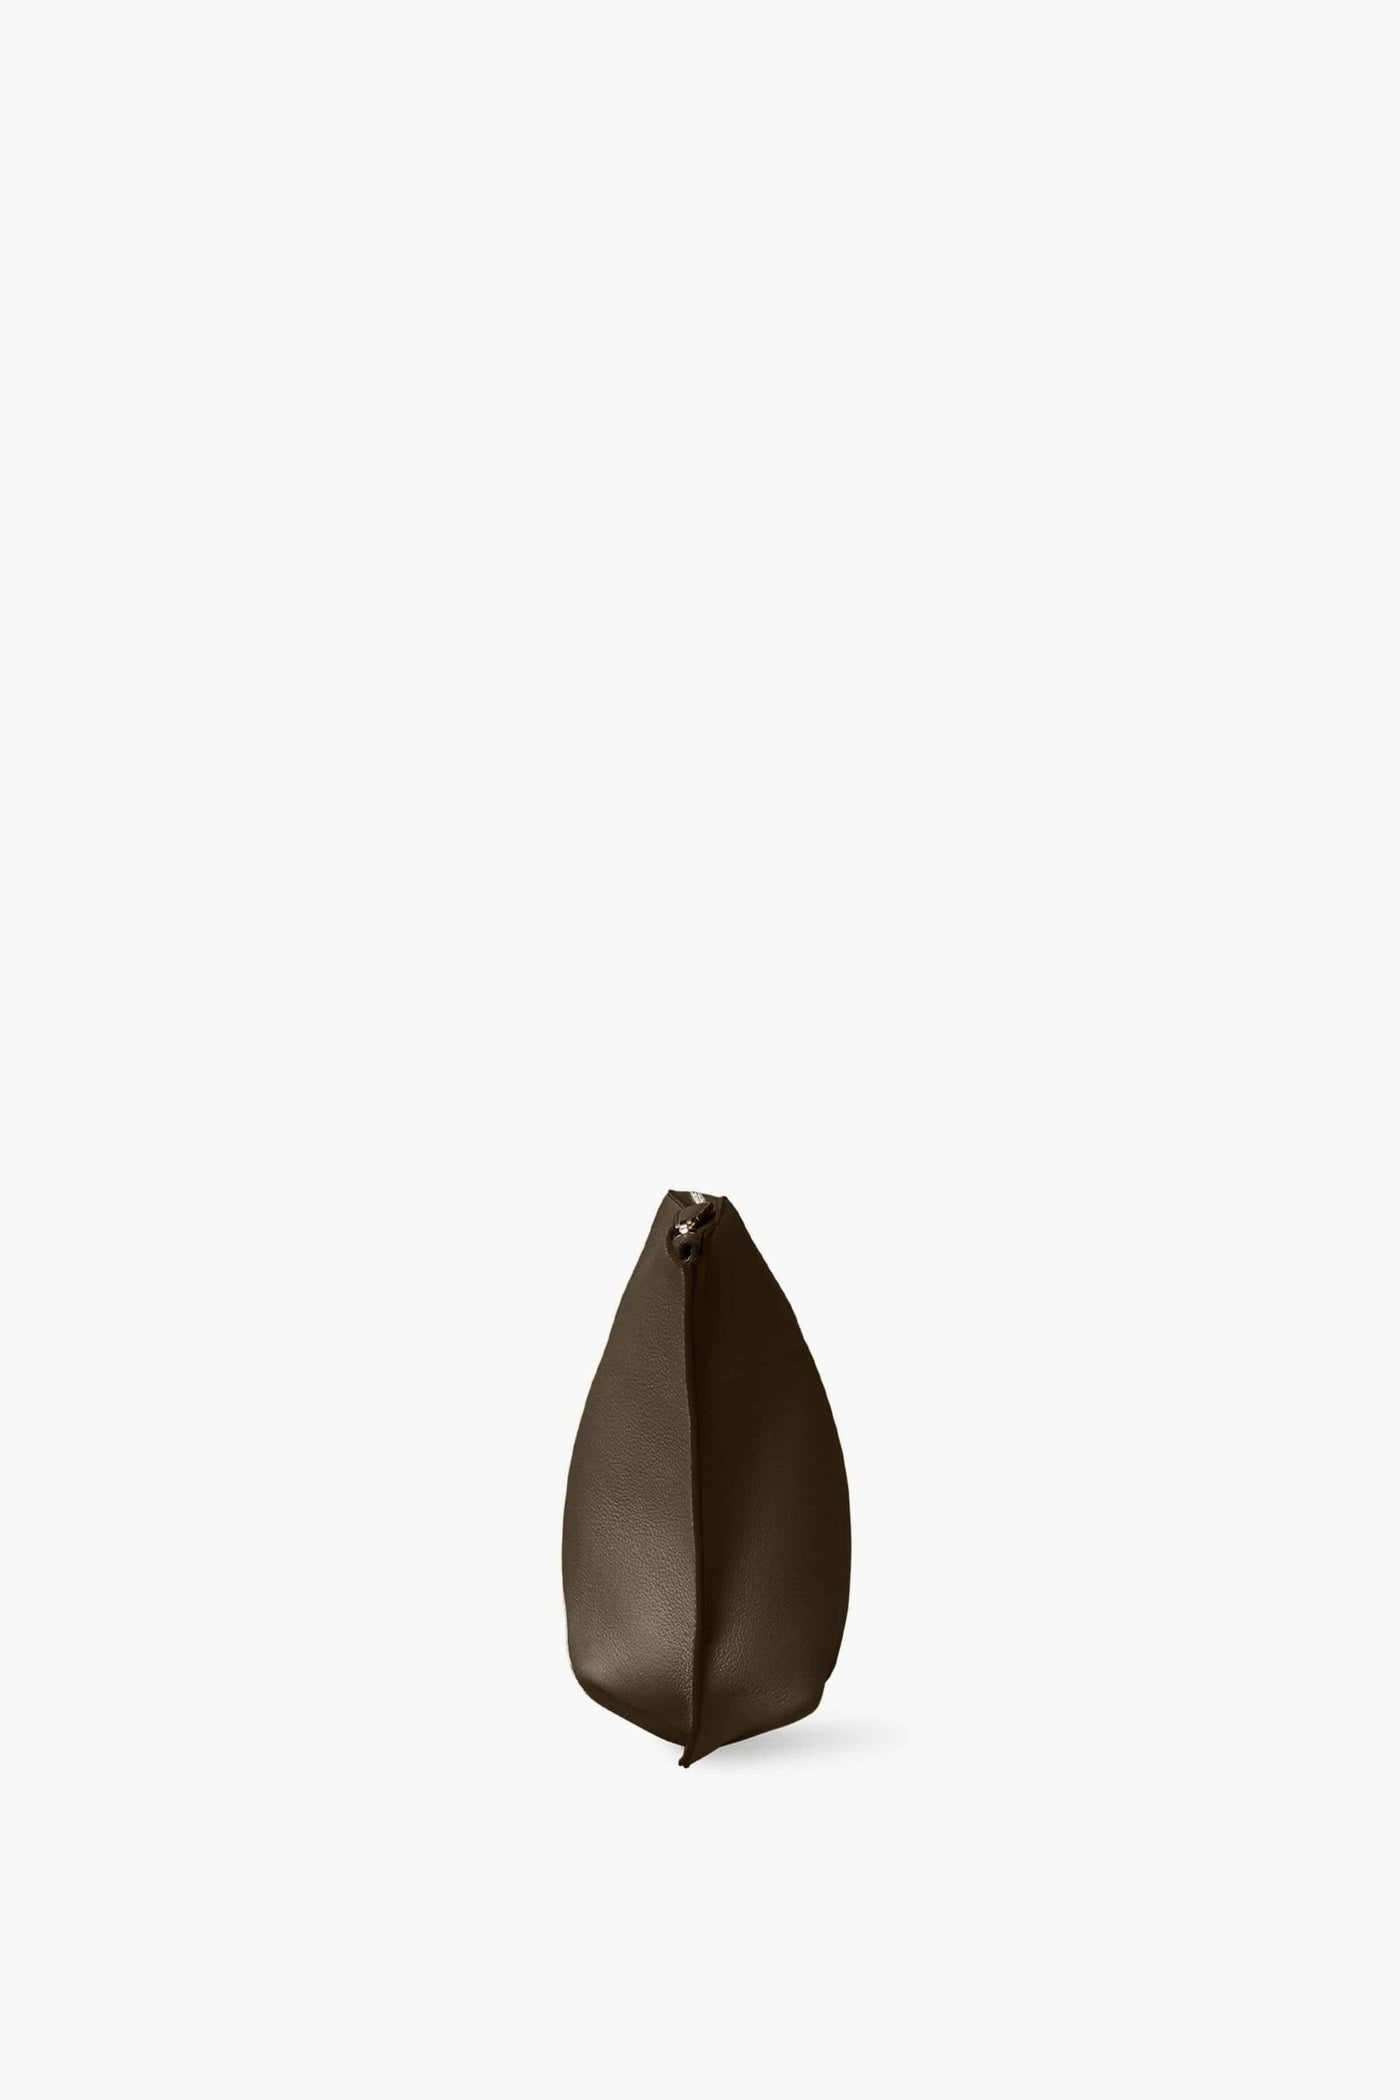 XL Dante Clutch in Olive Leather - The Row - Ileana Makri store